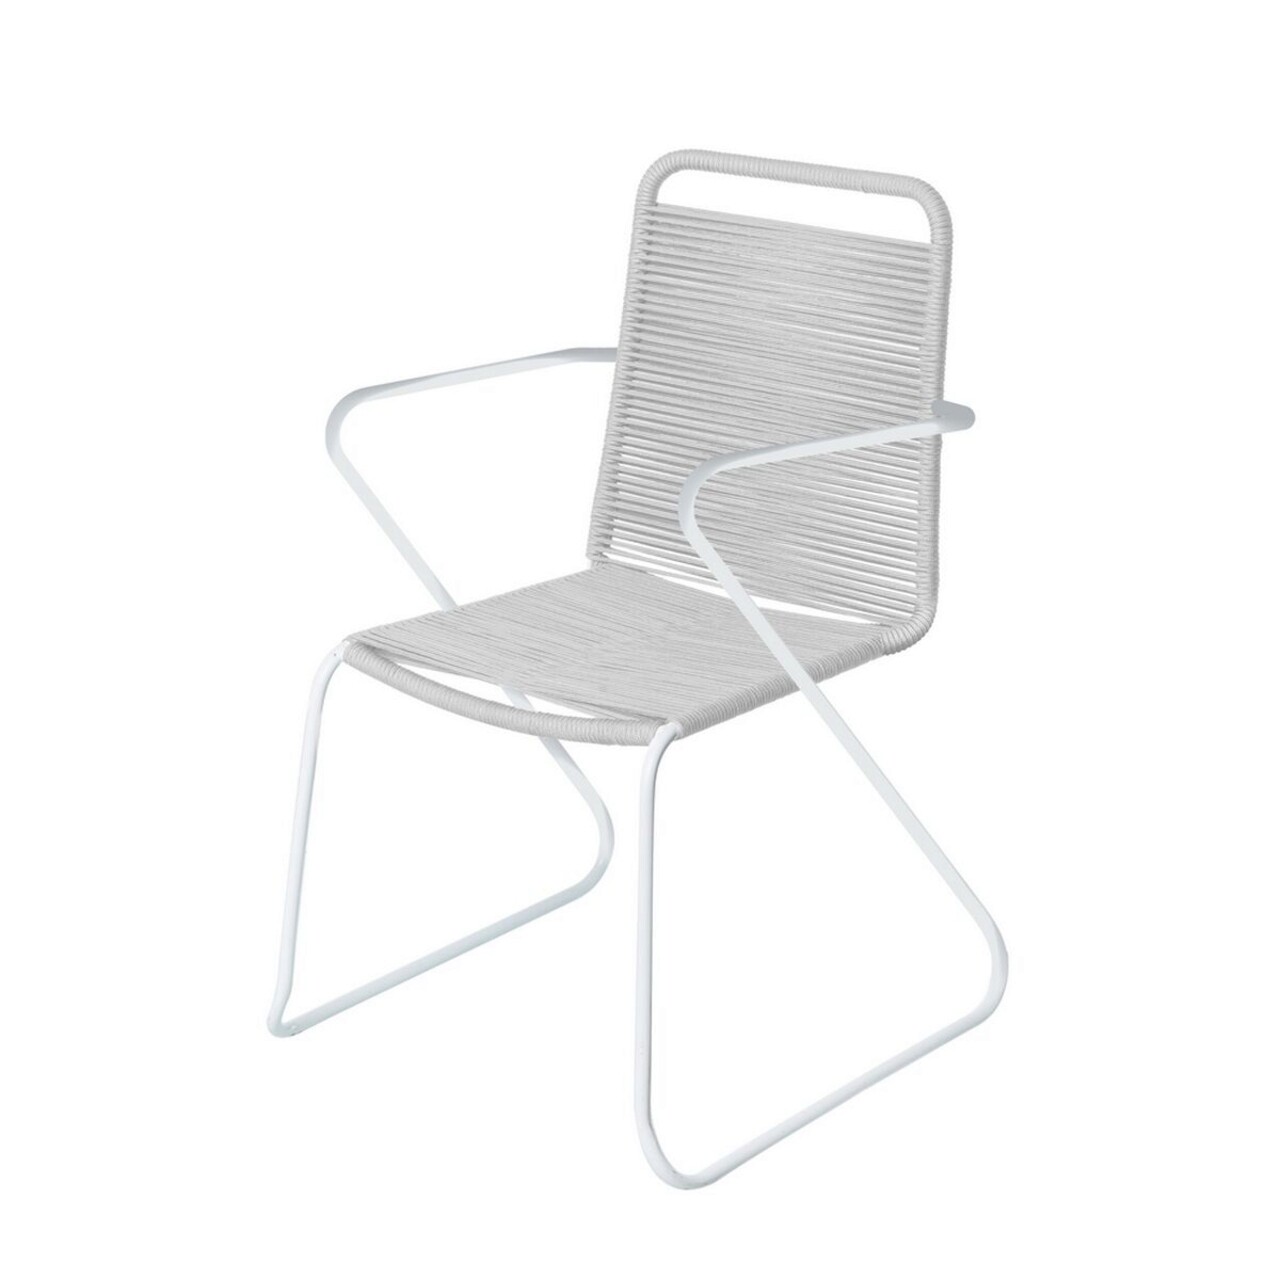 BigBuy Home Antea Kerti szék, 53 x 53 x 88 cm, acél/madzag, világosszürke